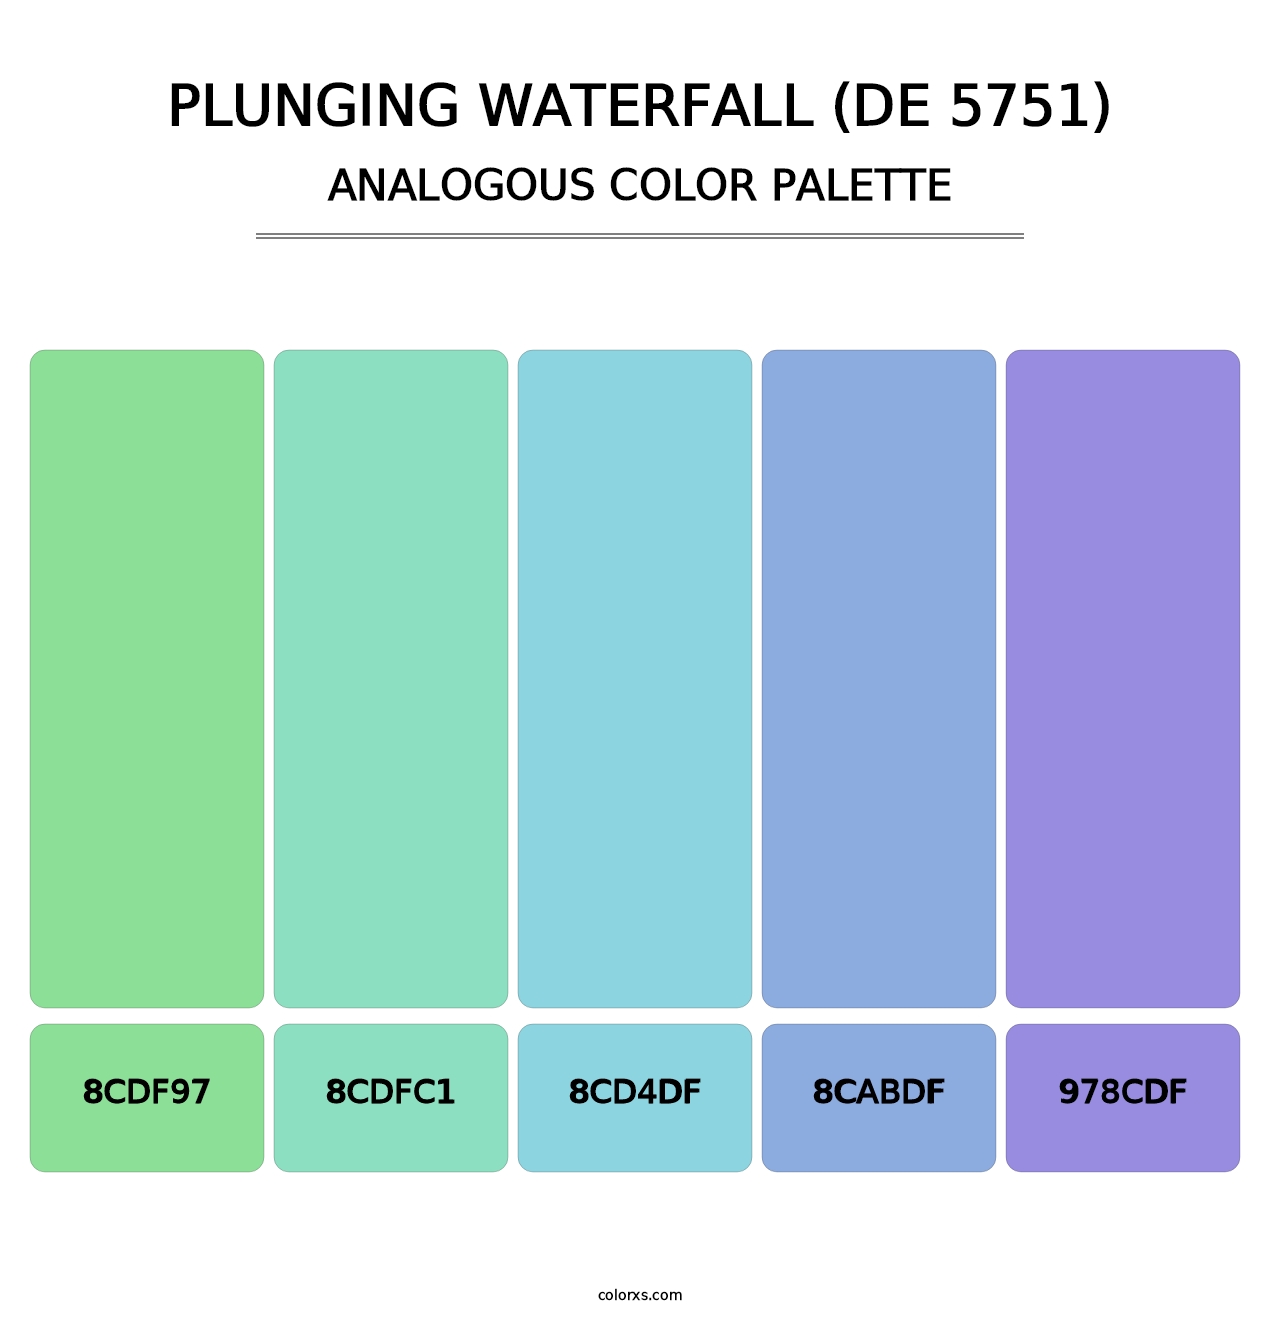 Plunging Waterfall (DE 5751) - Analogous Color Palette